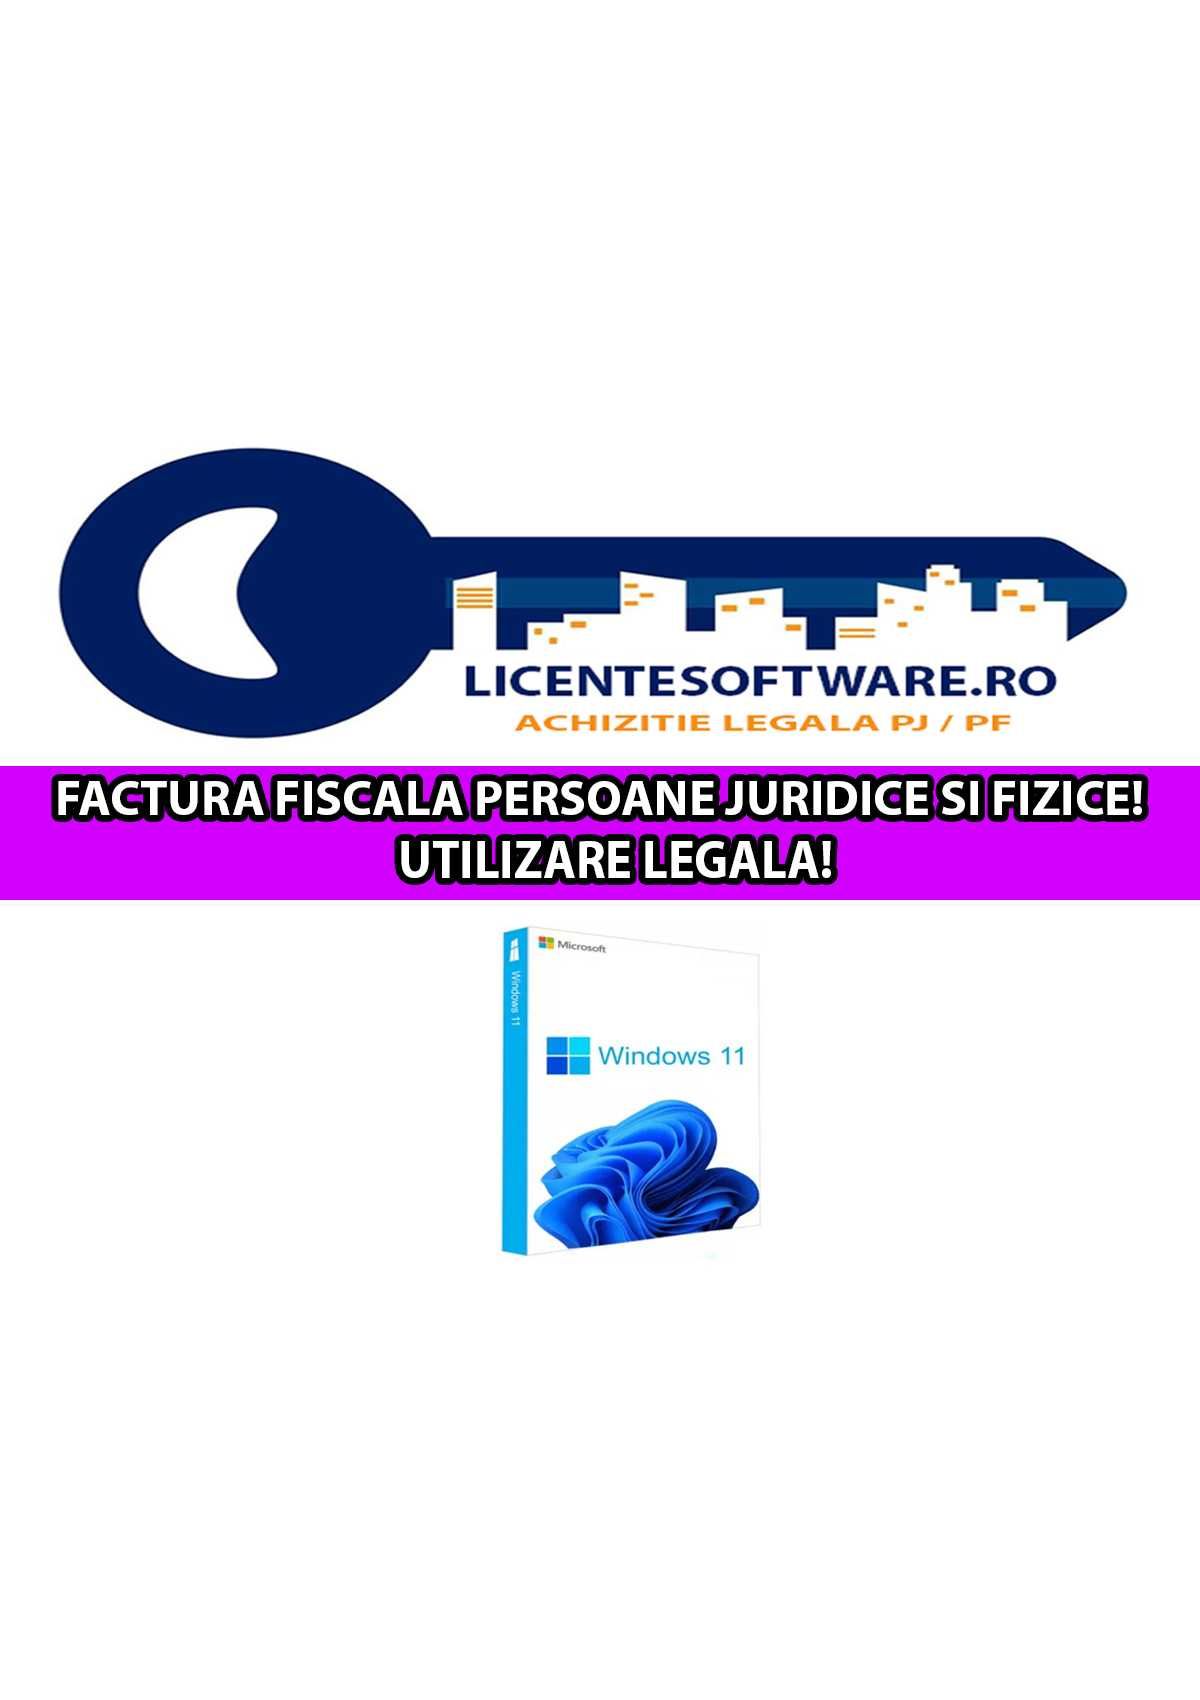 Licente Originale: Windows 11 PRO / HOME - RETAIL - Factura, LEGAL!